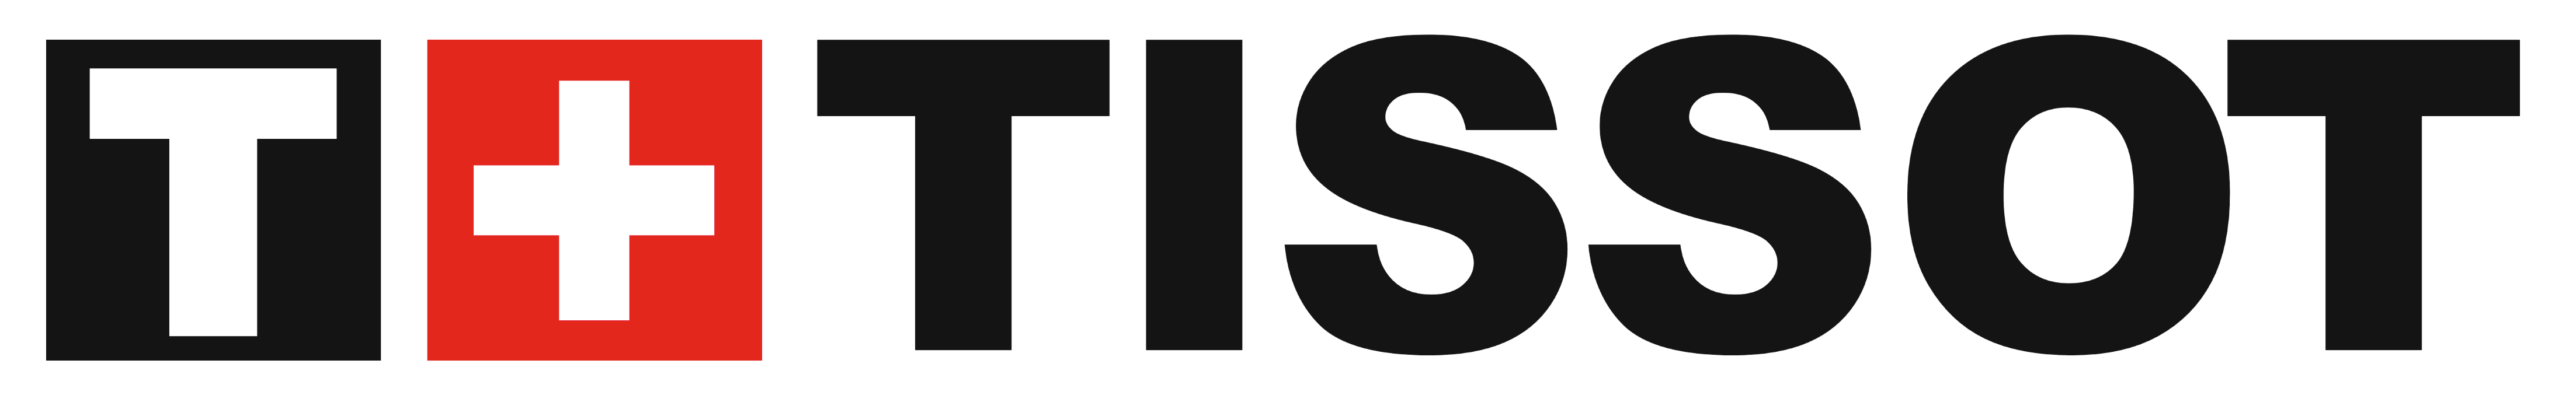 Tissot Brand Logo